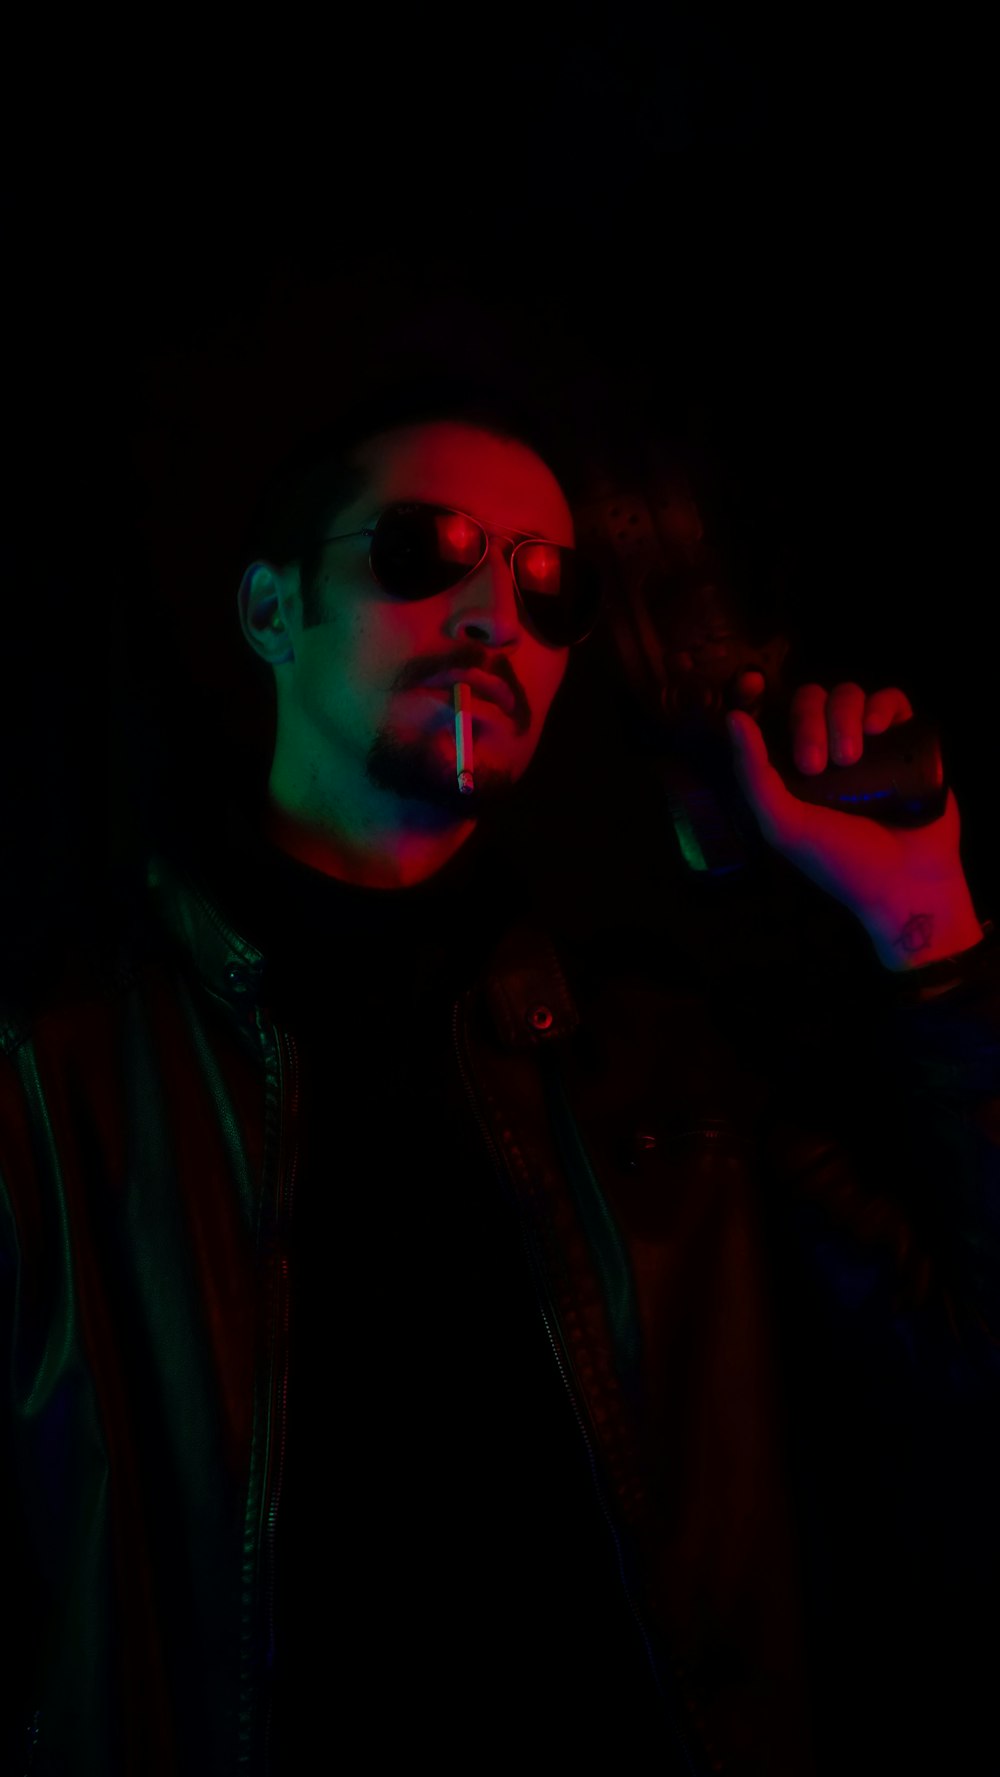 a man smoking a cigarette in the dark